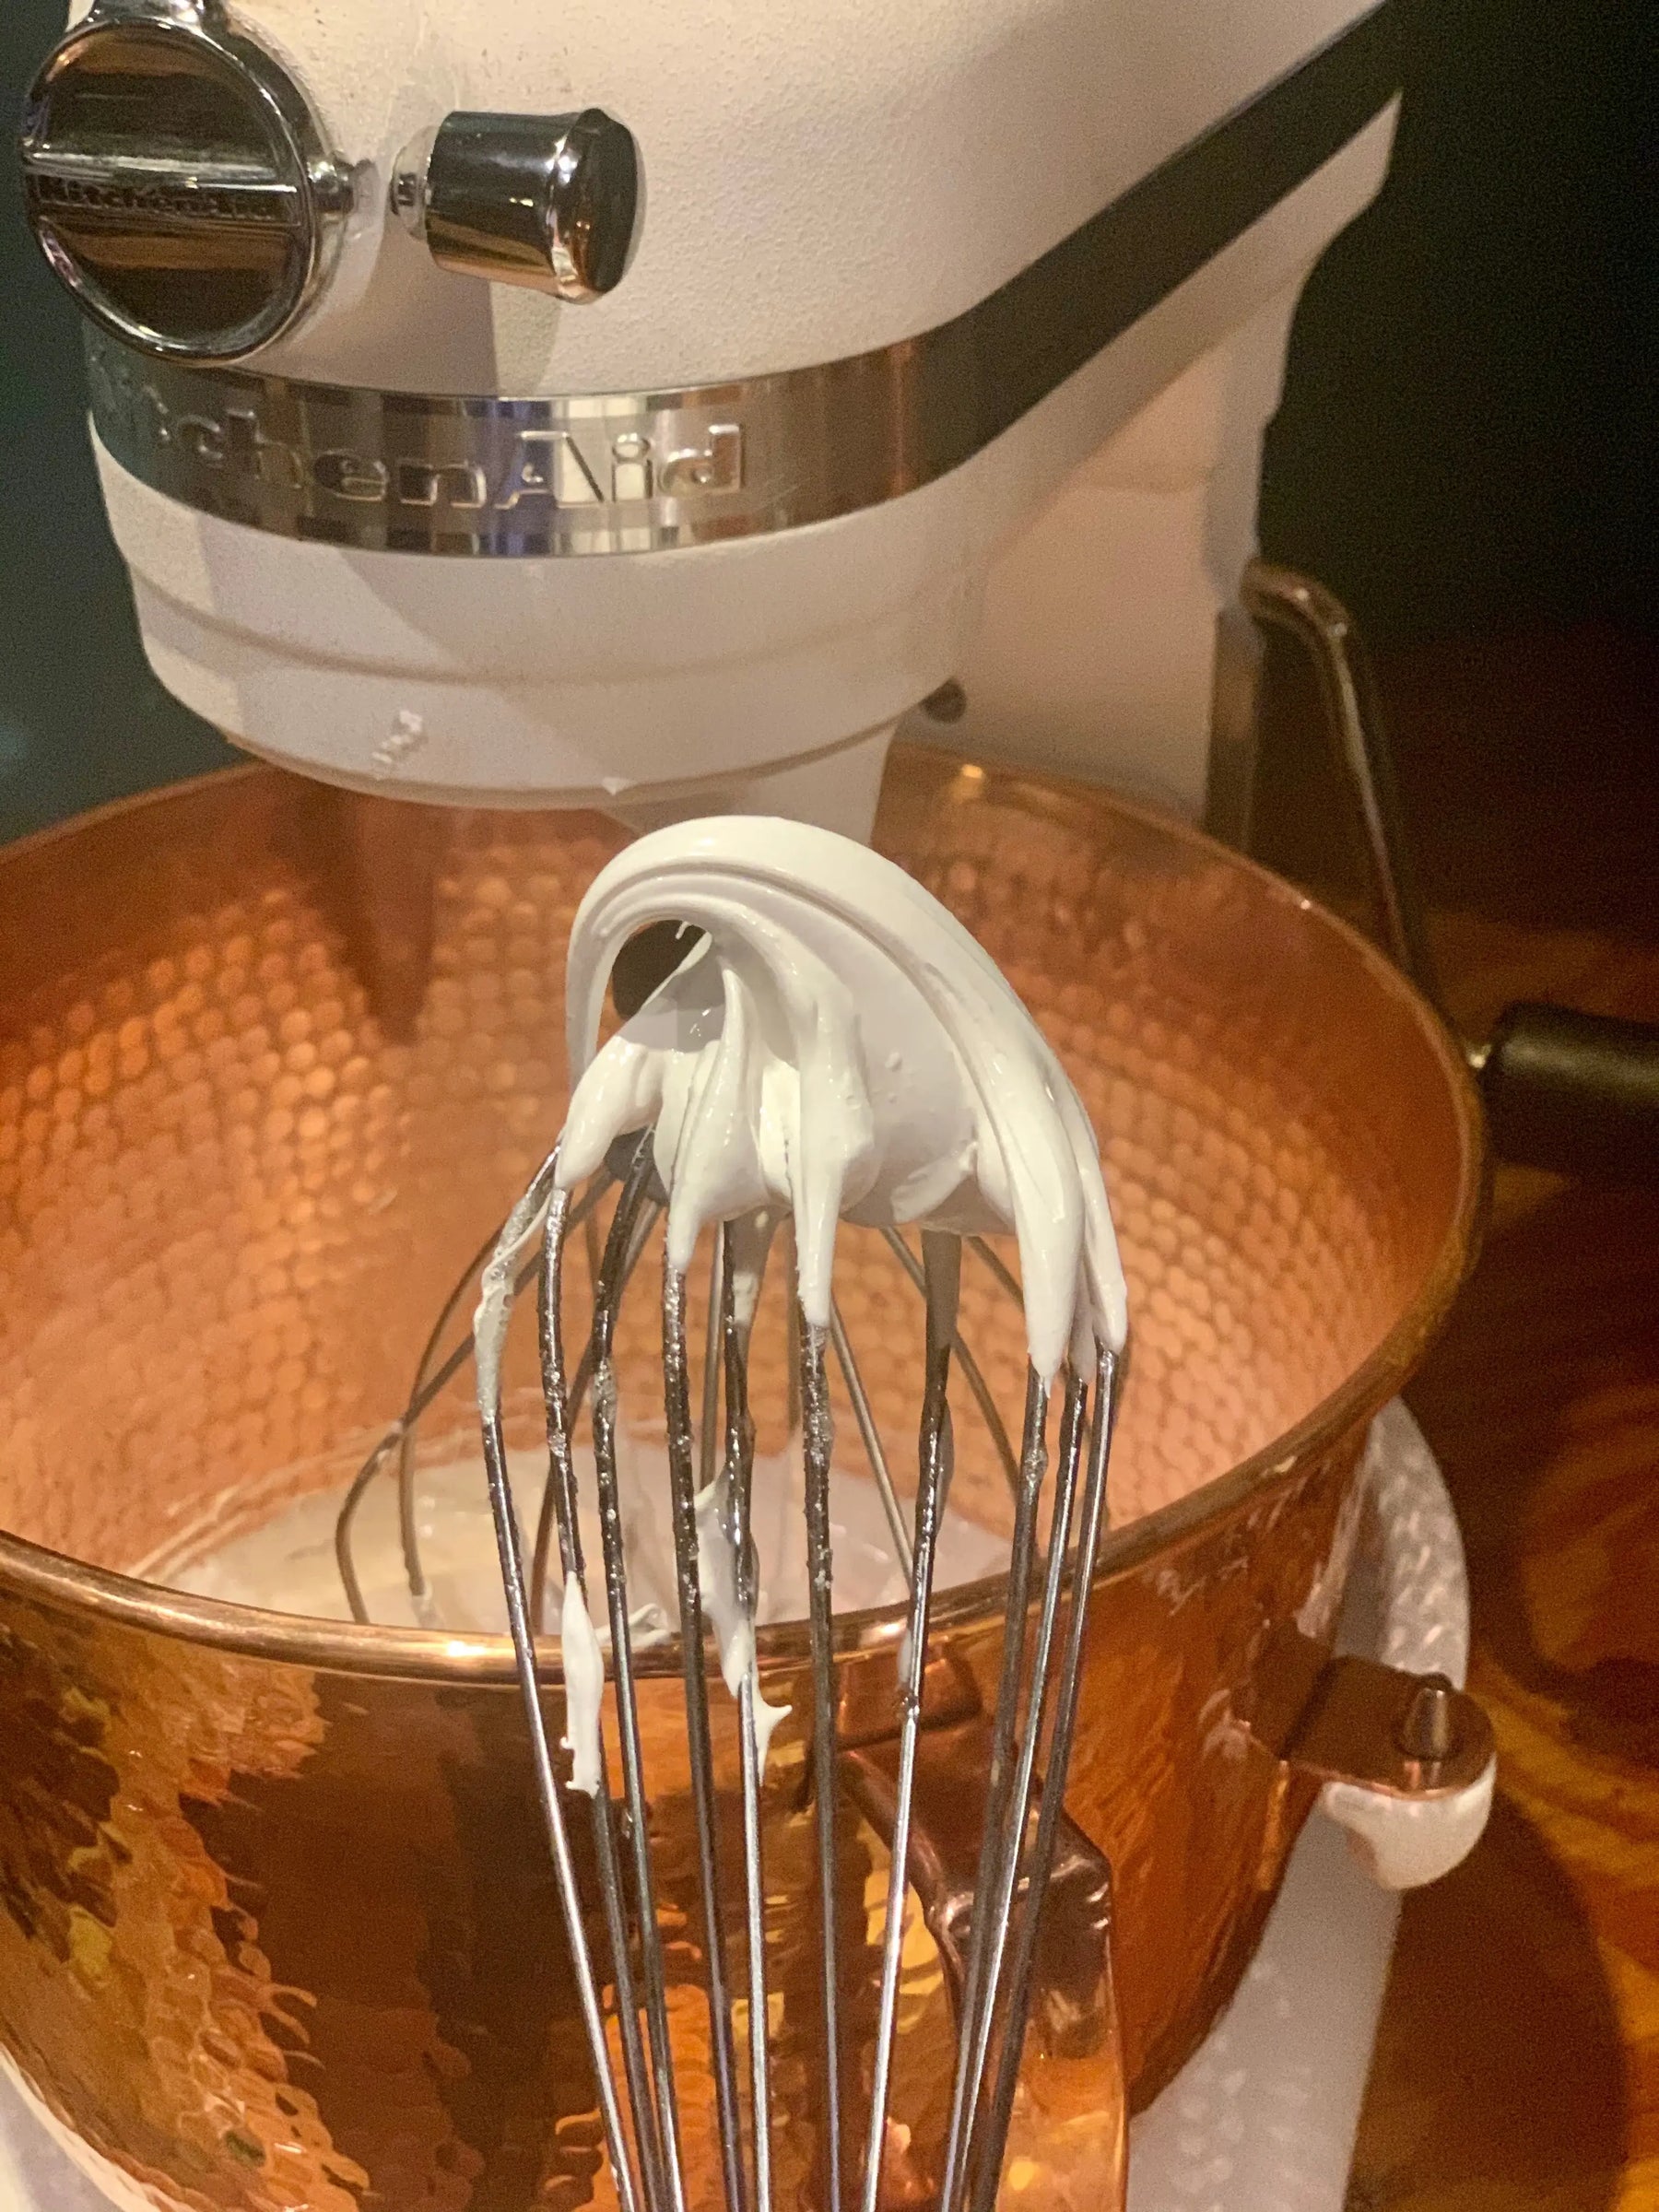 KitchenAid Artisan Copper Bowl - French Copper Studio